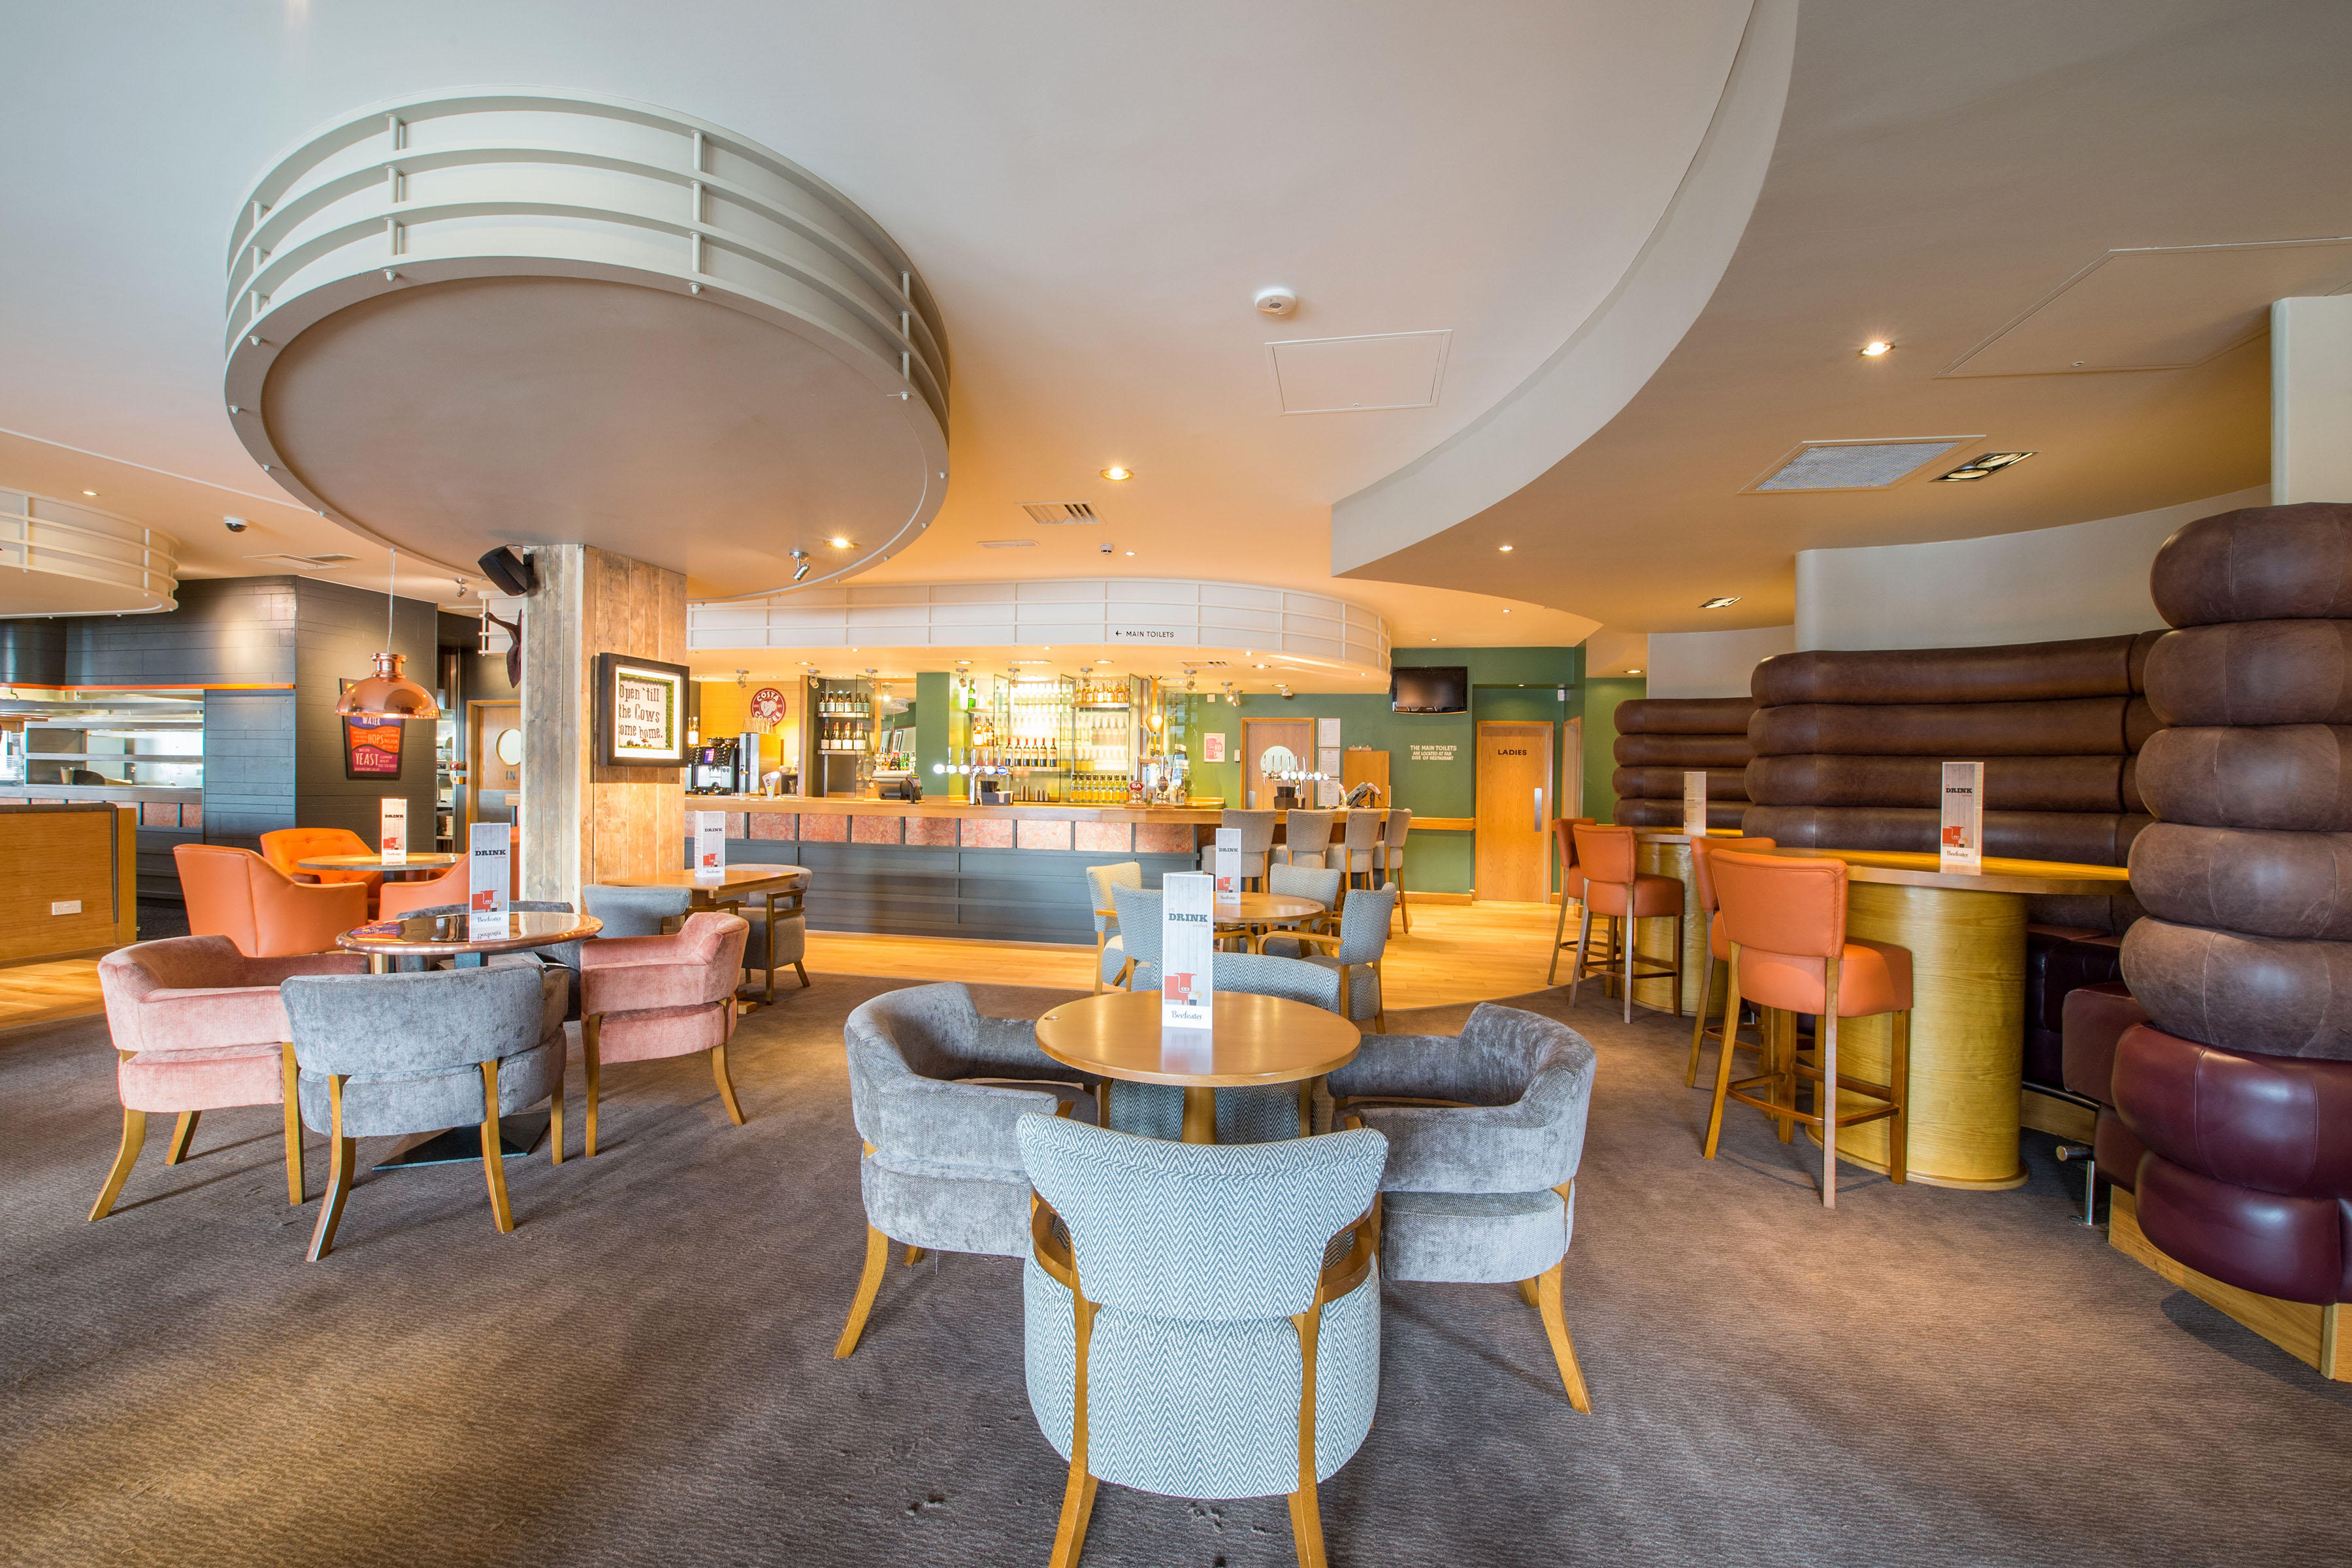 Beefeater restaurant Premier Inn Swansea Waterfront hotel Swansea 03333 219208